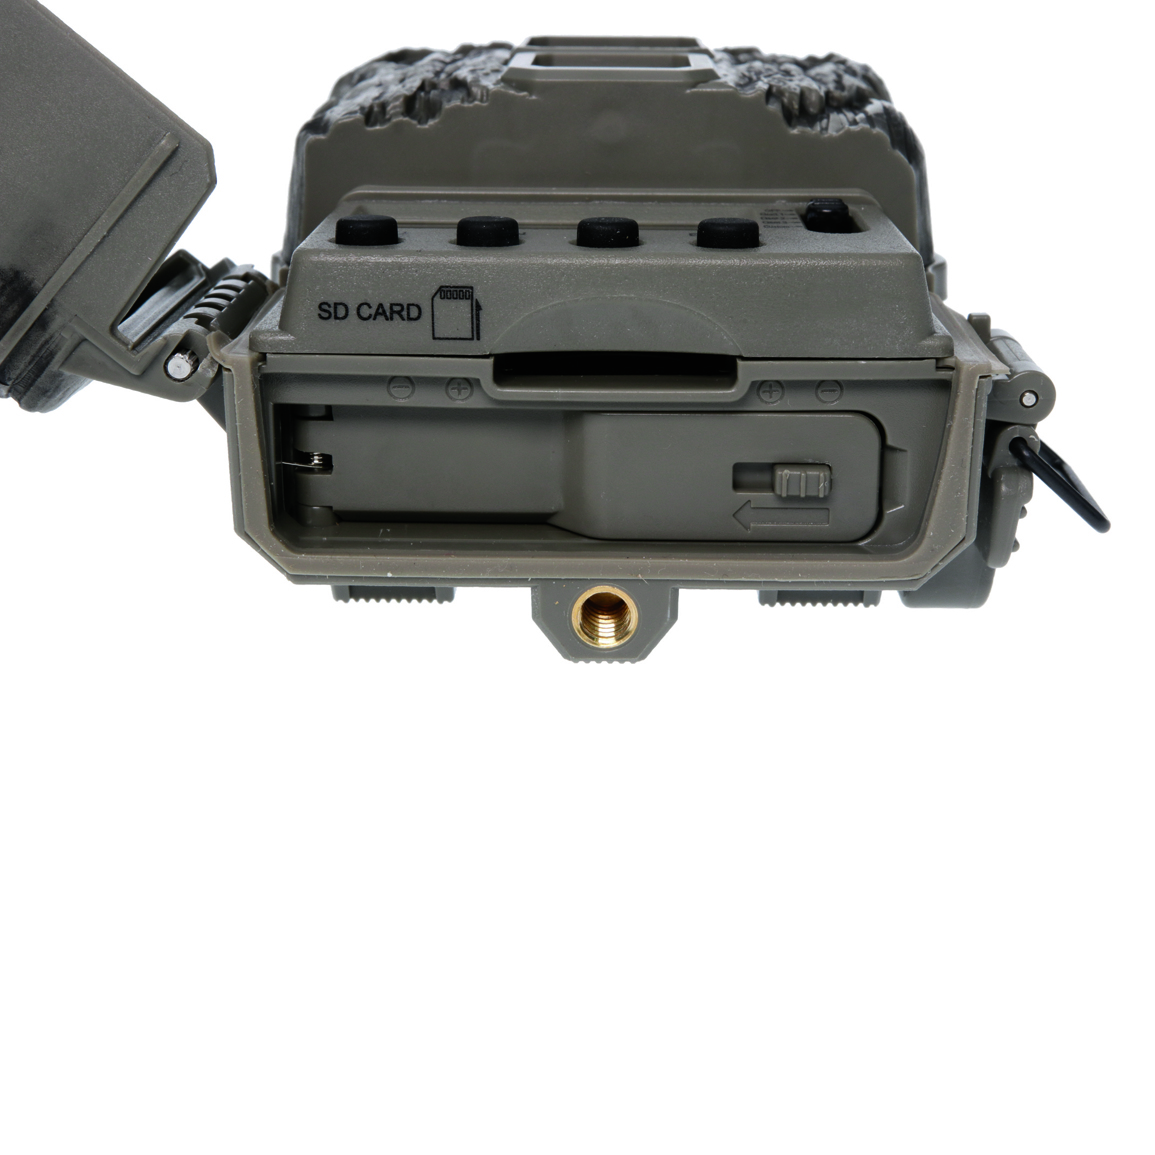 Stealth Cam QS22 Trail/Game Camera Kit, 22MP